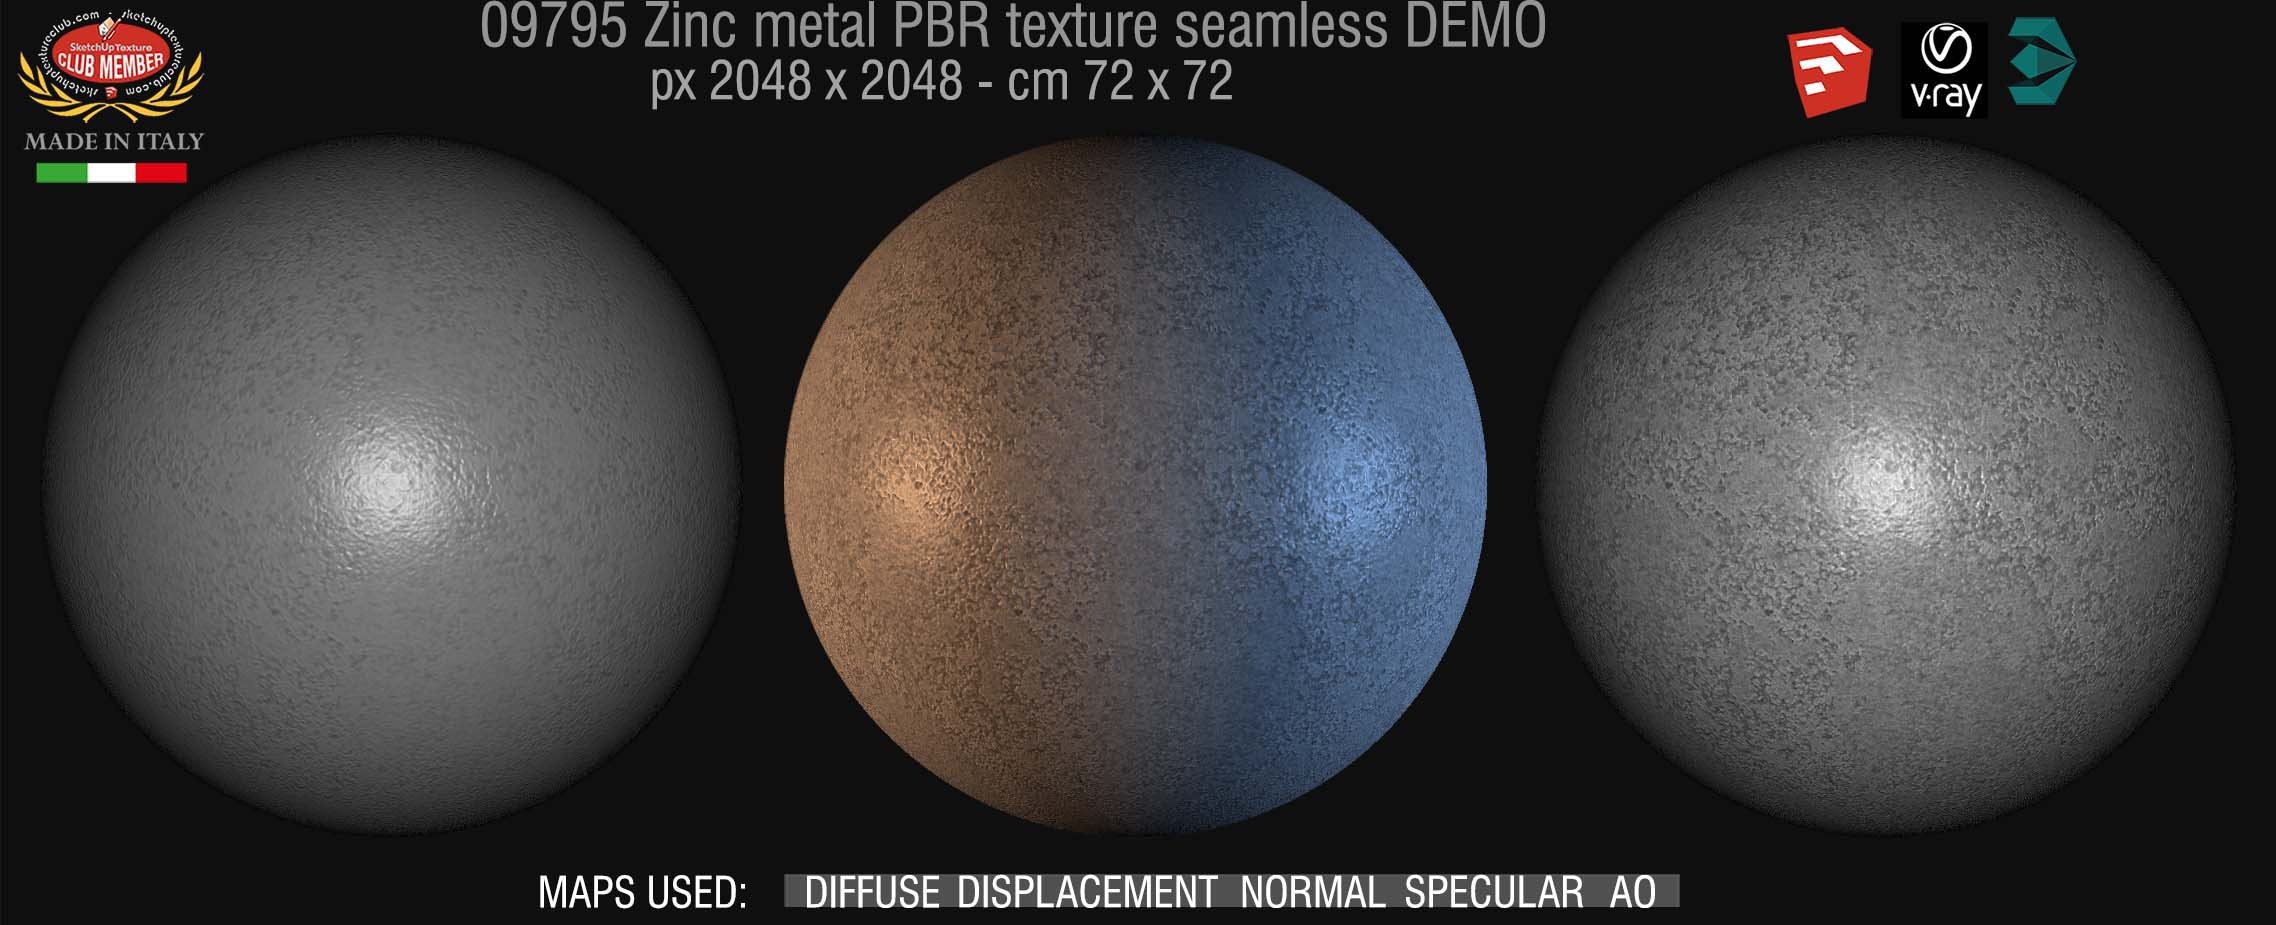 09795 Iron metal PBR texture seamless DEMO